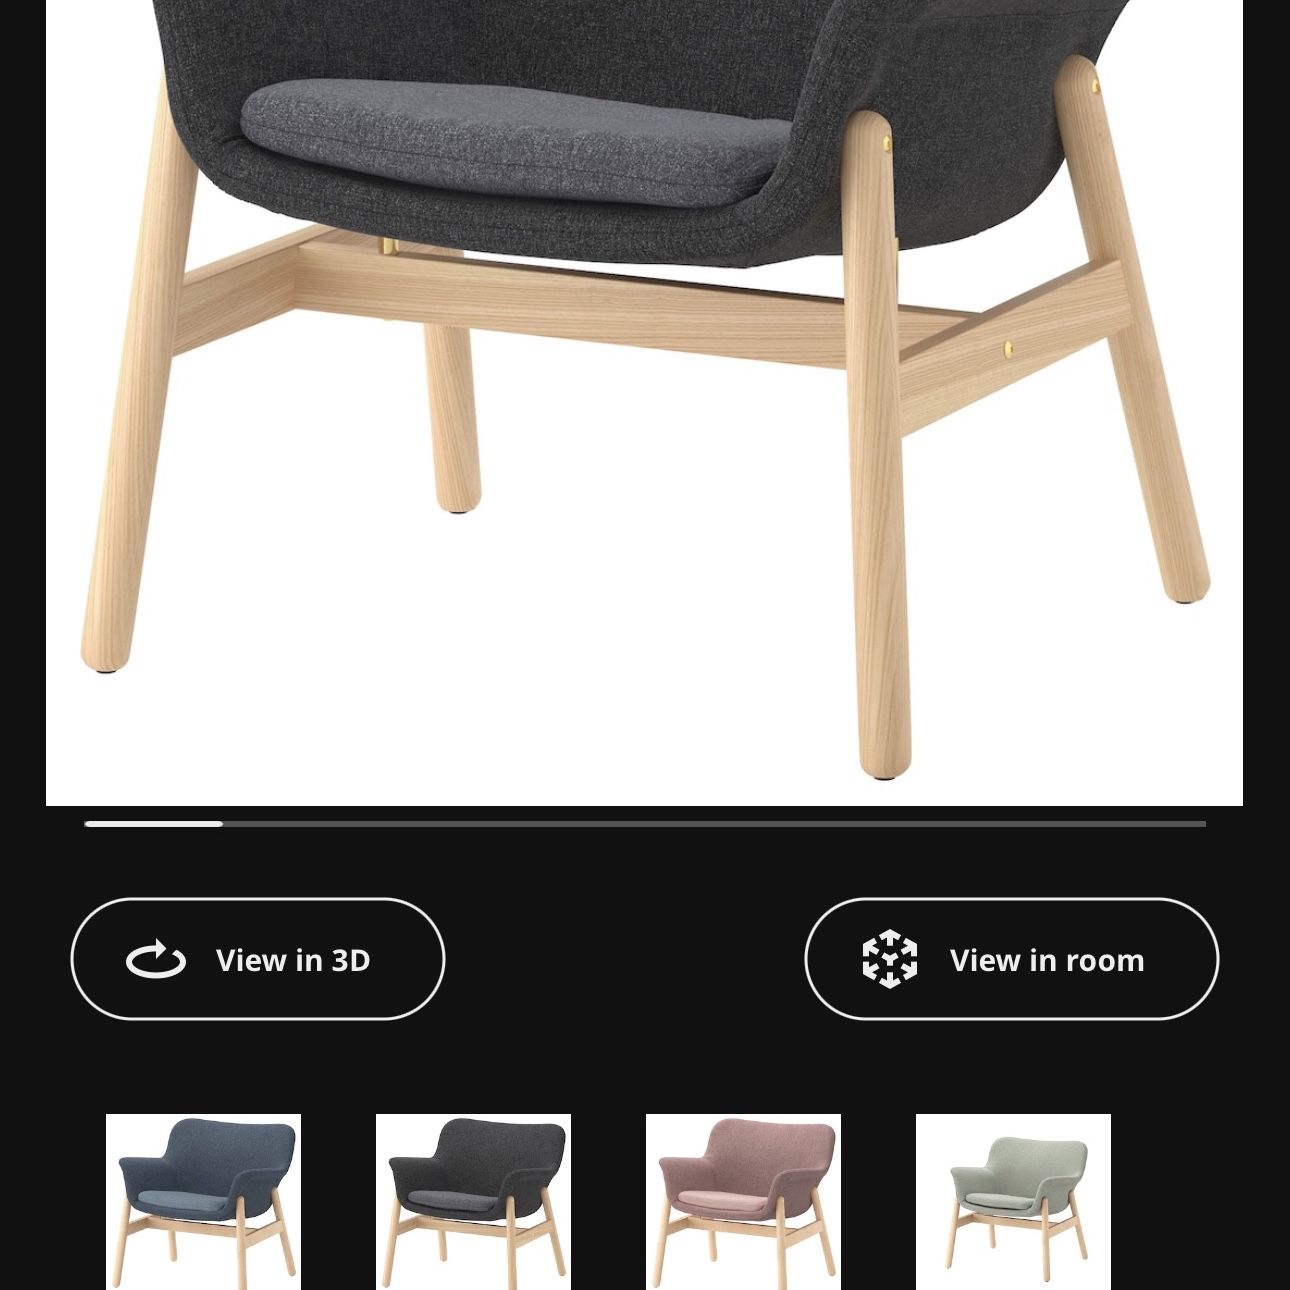 IKEA VEDBO CHAIR ON SALE $200